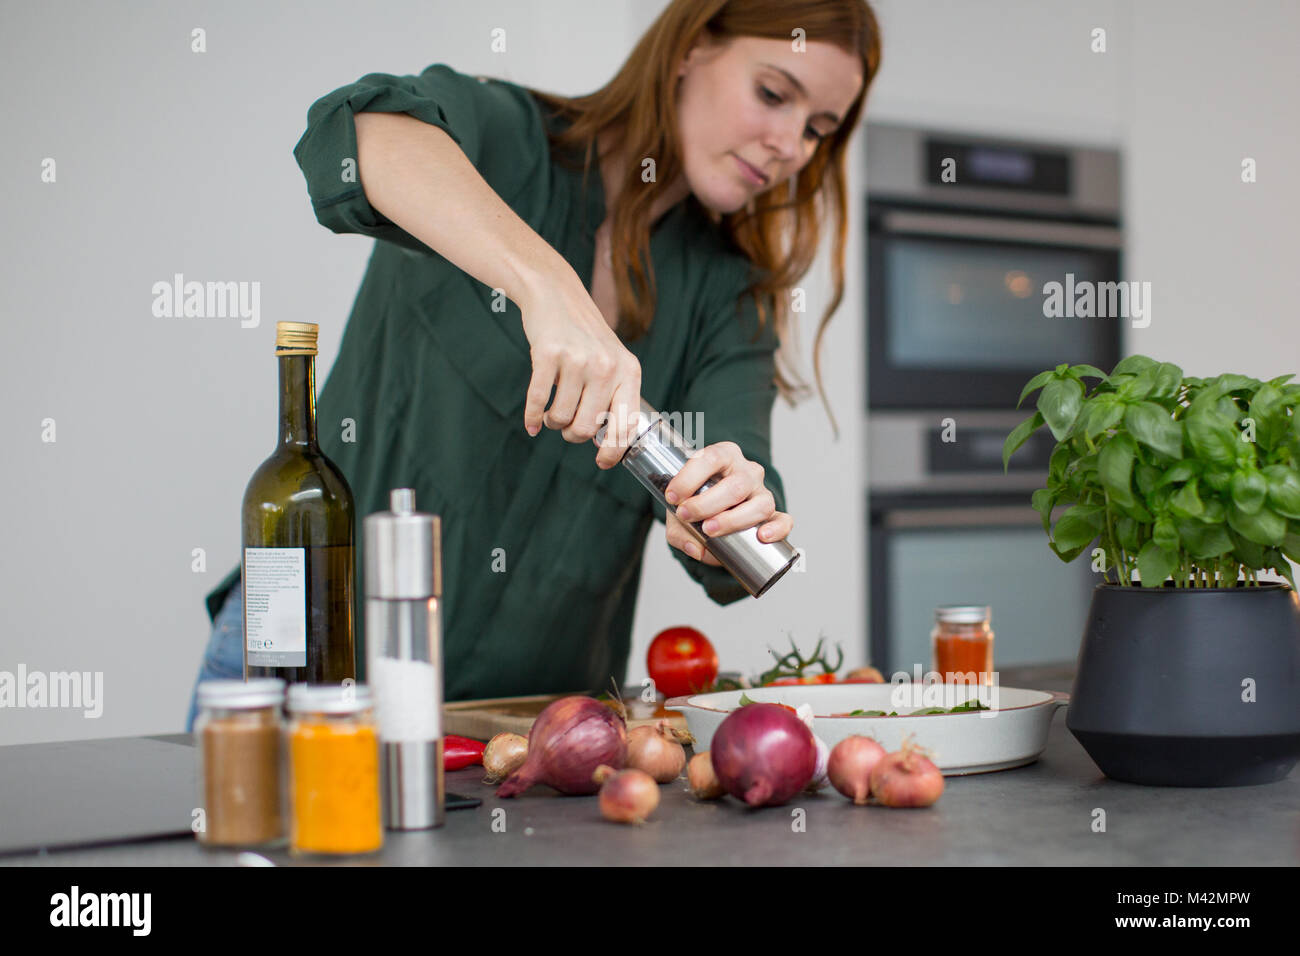 Adult female seasoning a dish Stock Photo